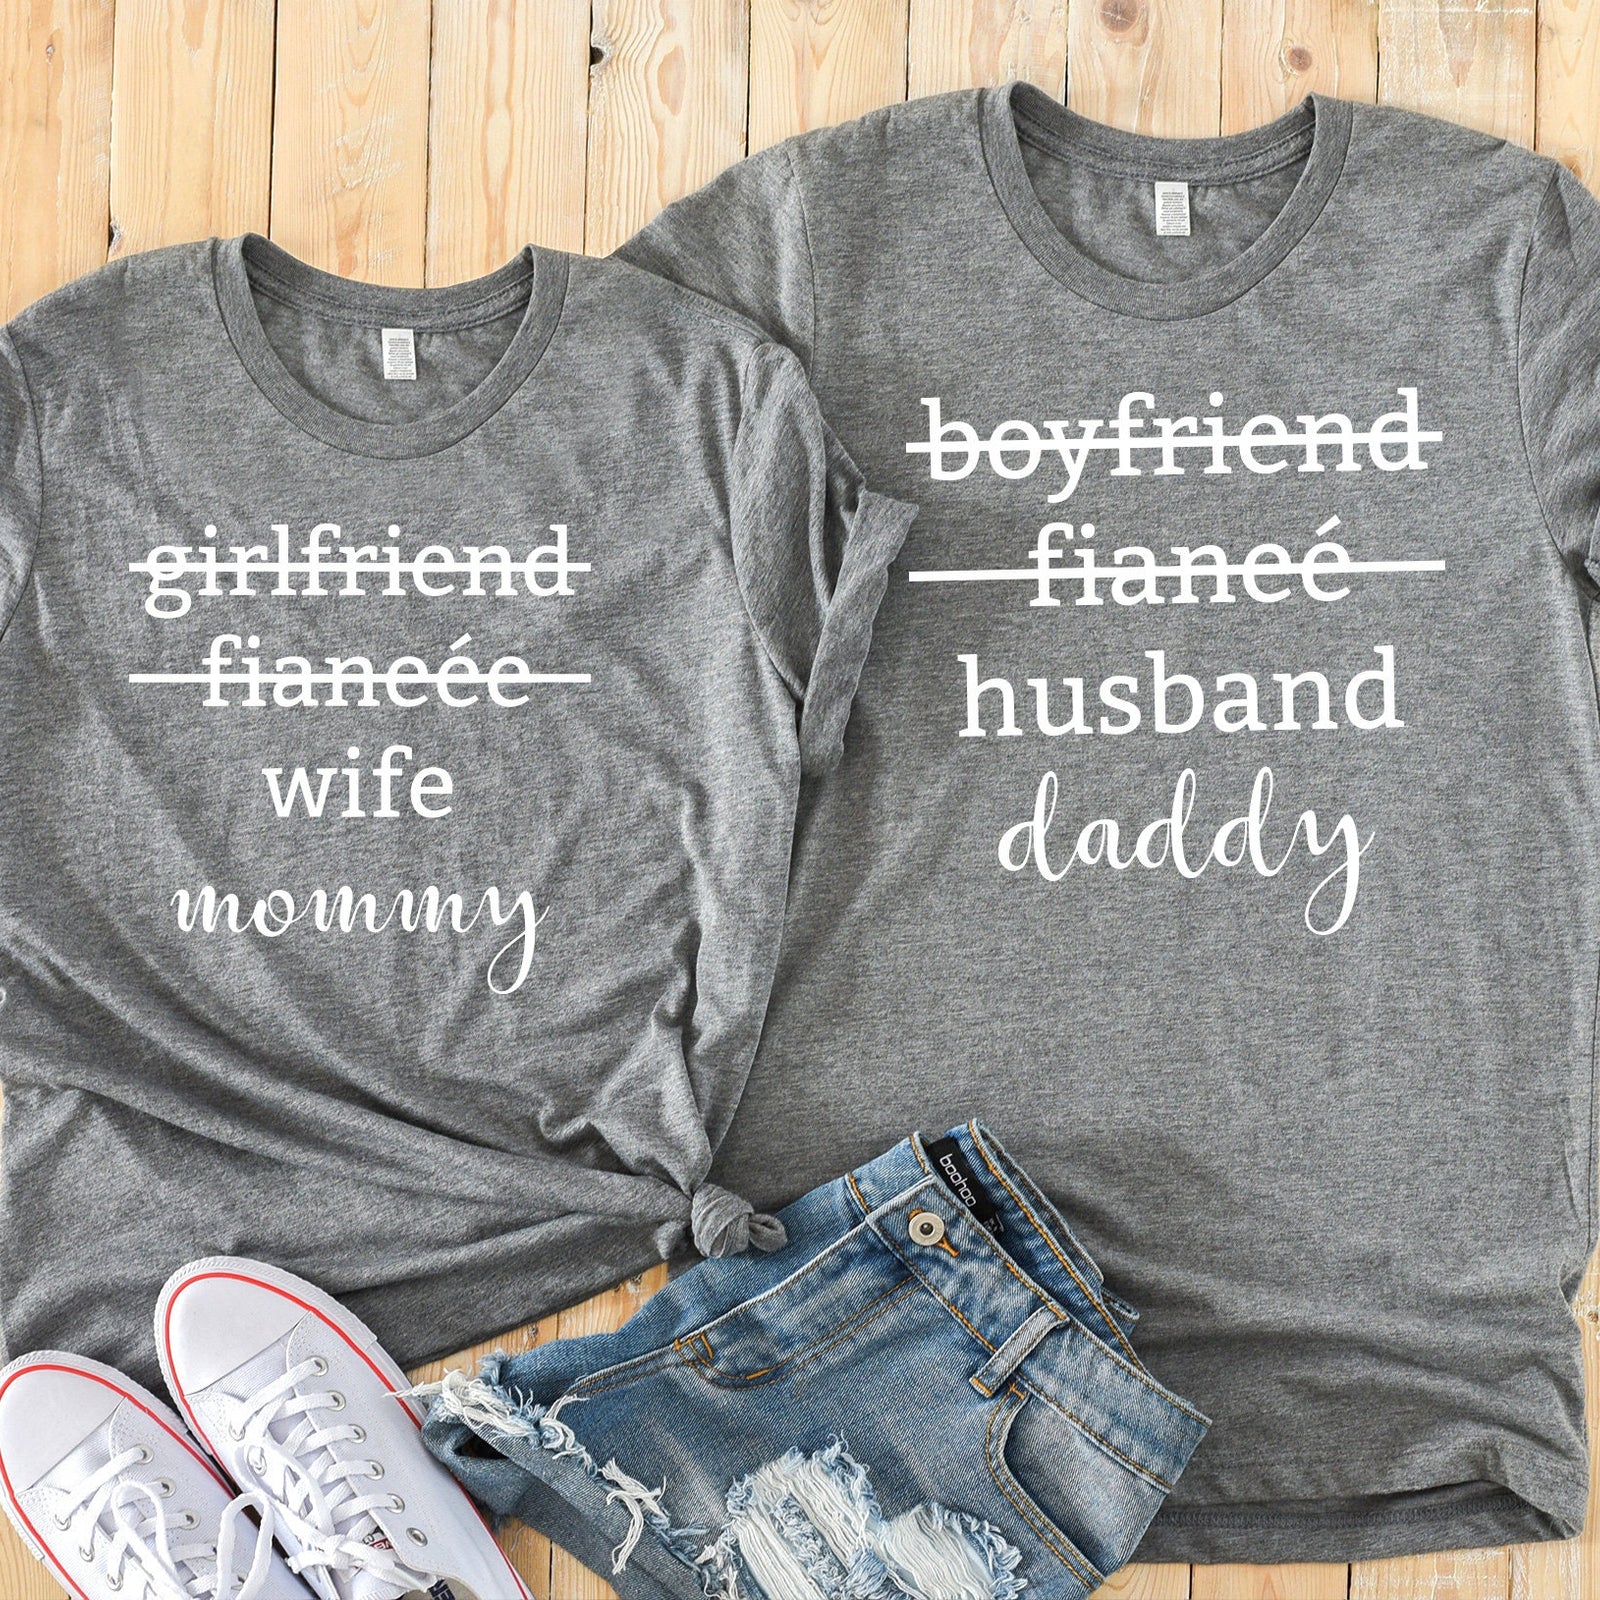 Girlfriend Fiance Wife Mommy - Boyfriend Fiance Husband Daddy  - Couples Matching Shirts - Pregnancy Announcement